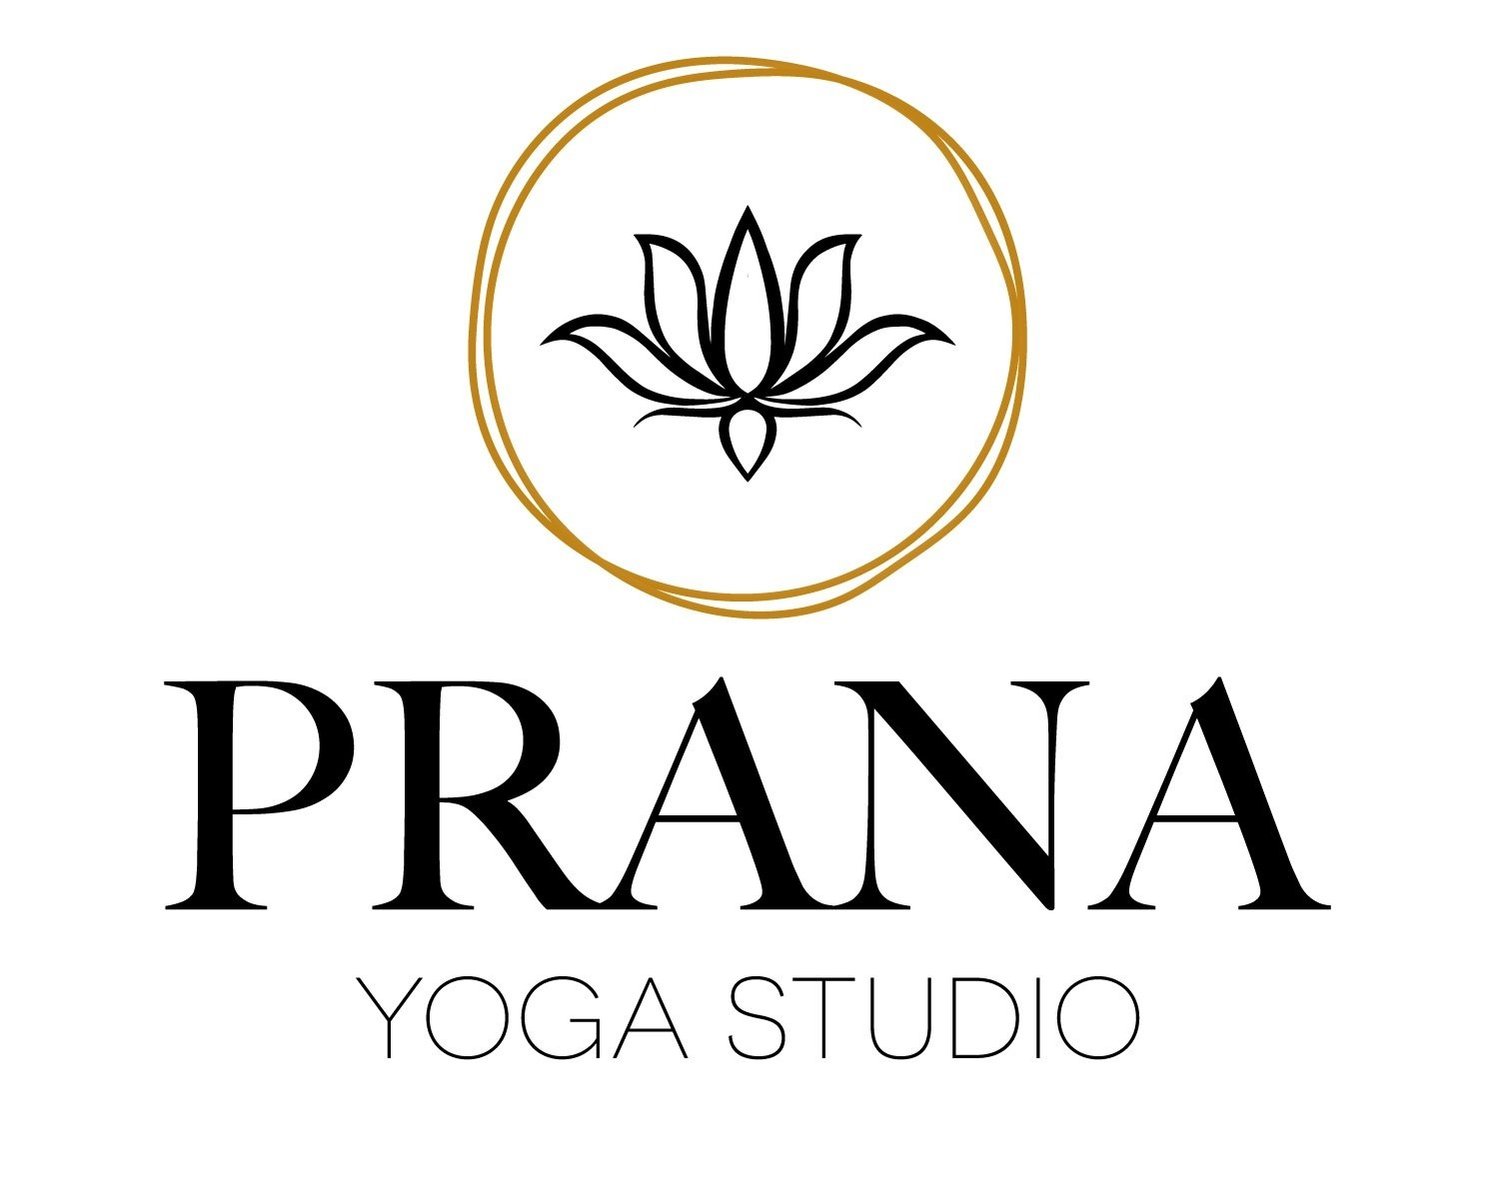 About Prana Yoga Center